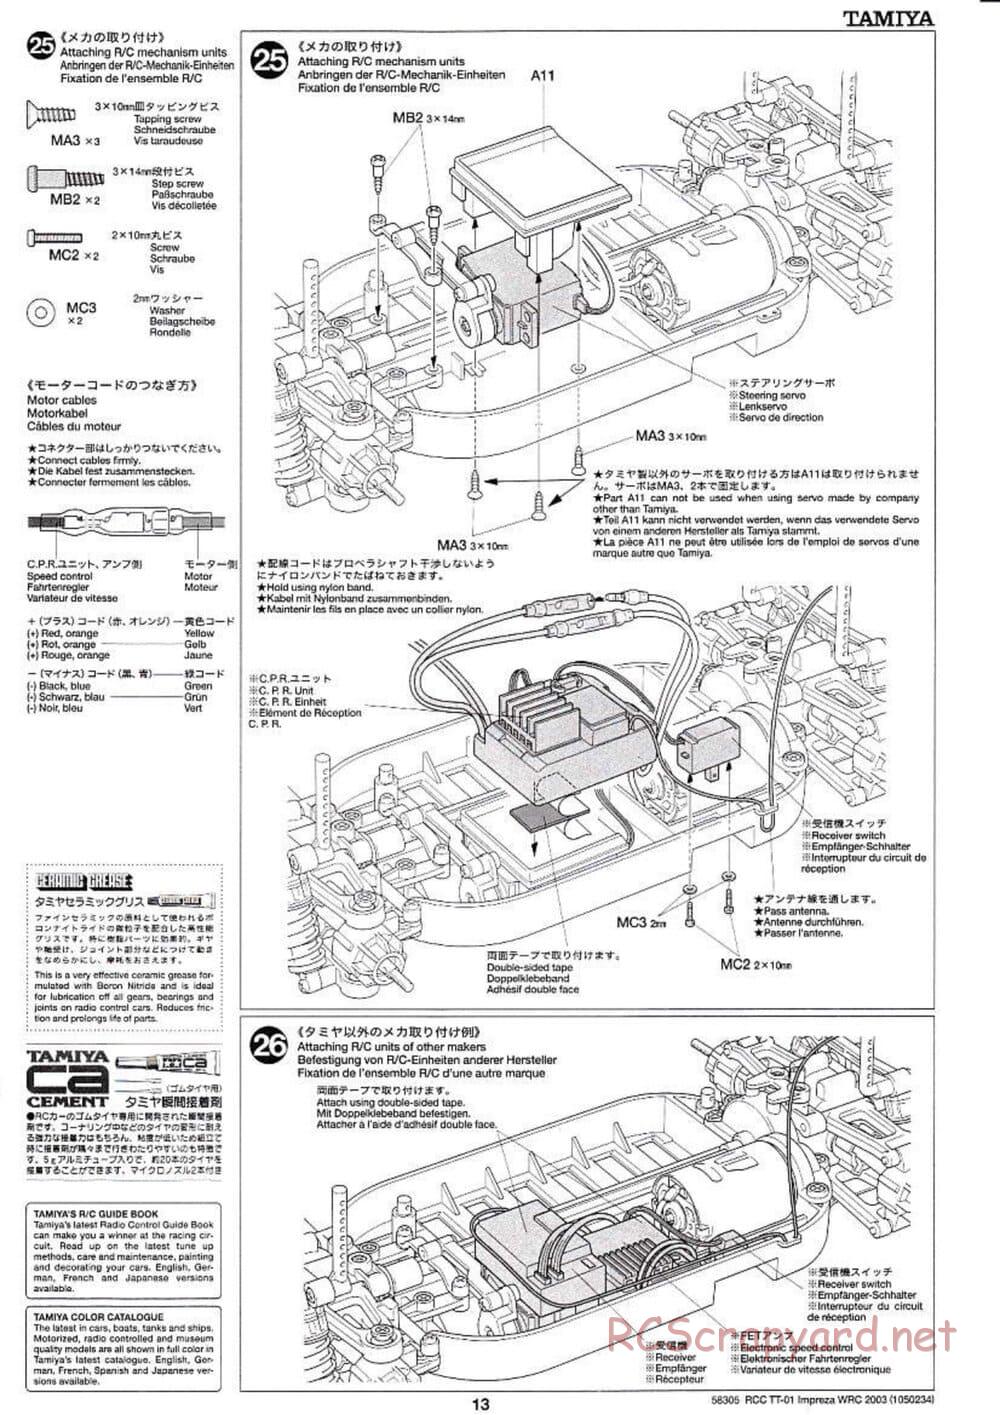 Tamiya - Subaru Impreza WRC 2003 - TT-01 Chassis - Manual - Page 13